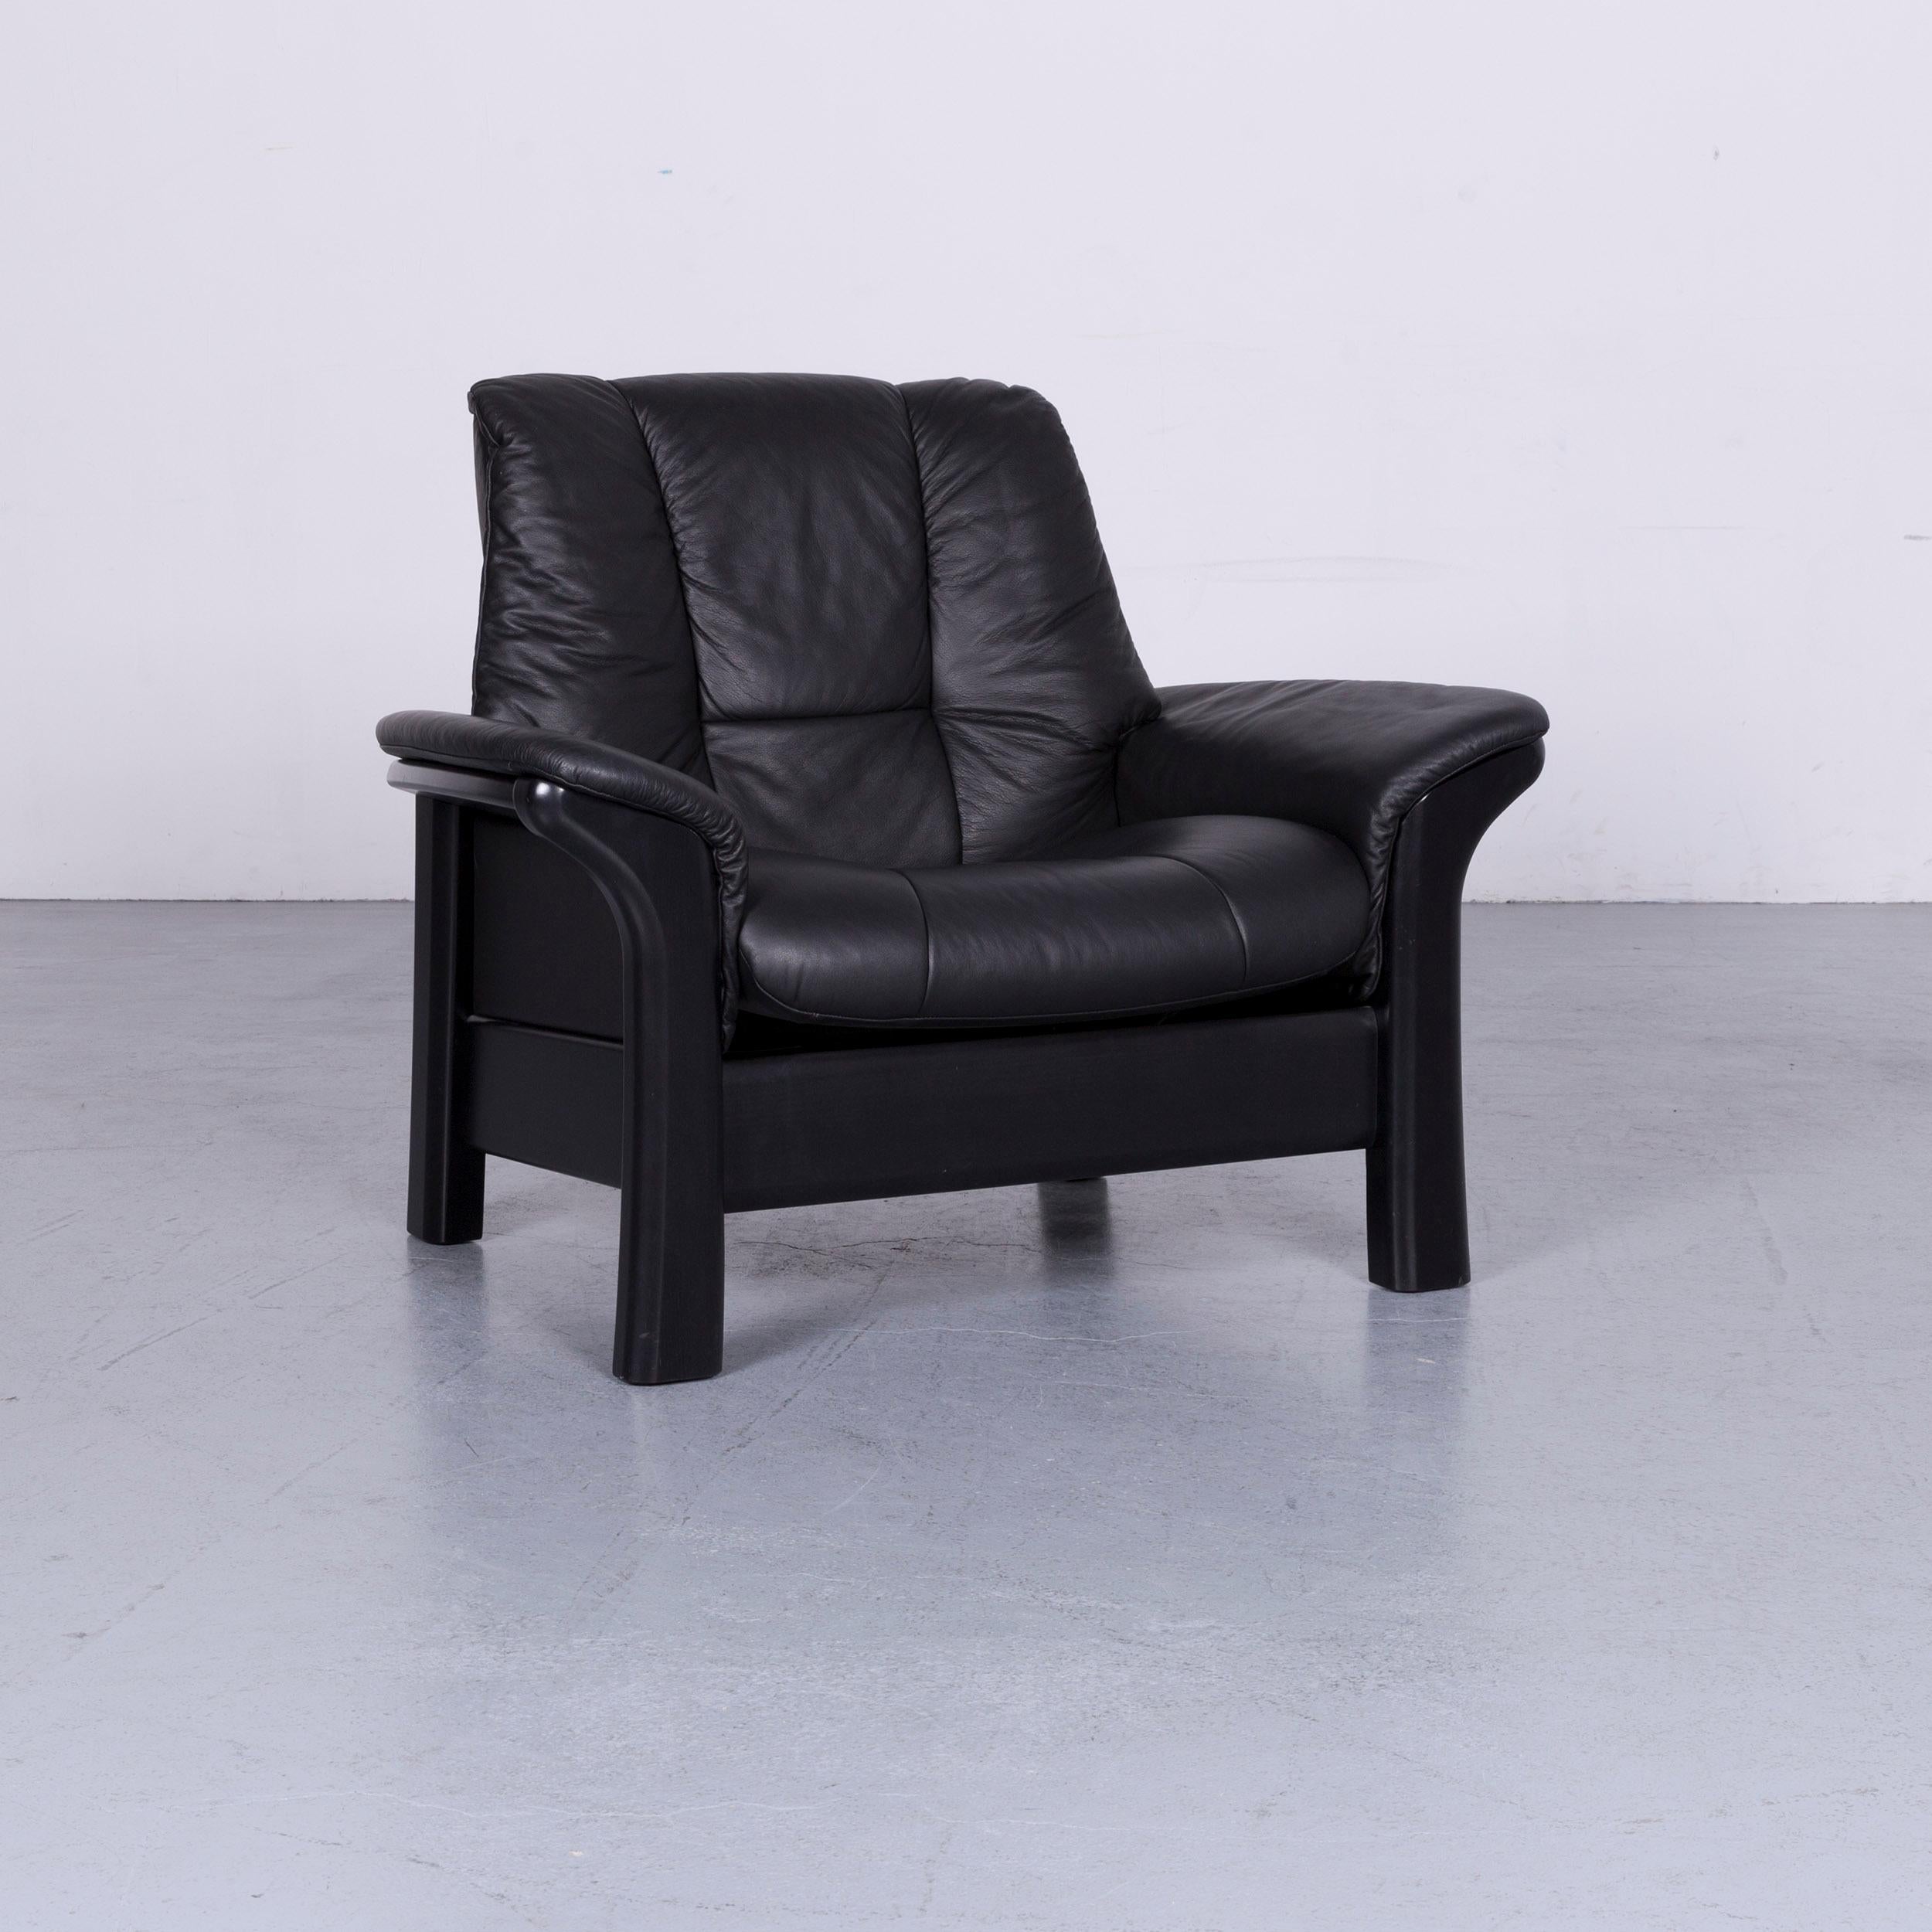 We bring to you an Ekornes Stressless Buckingham leather armchair black.